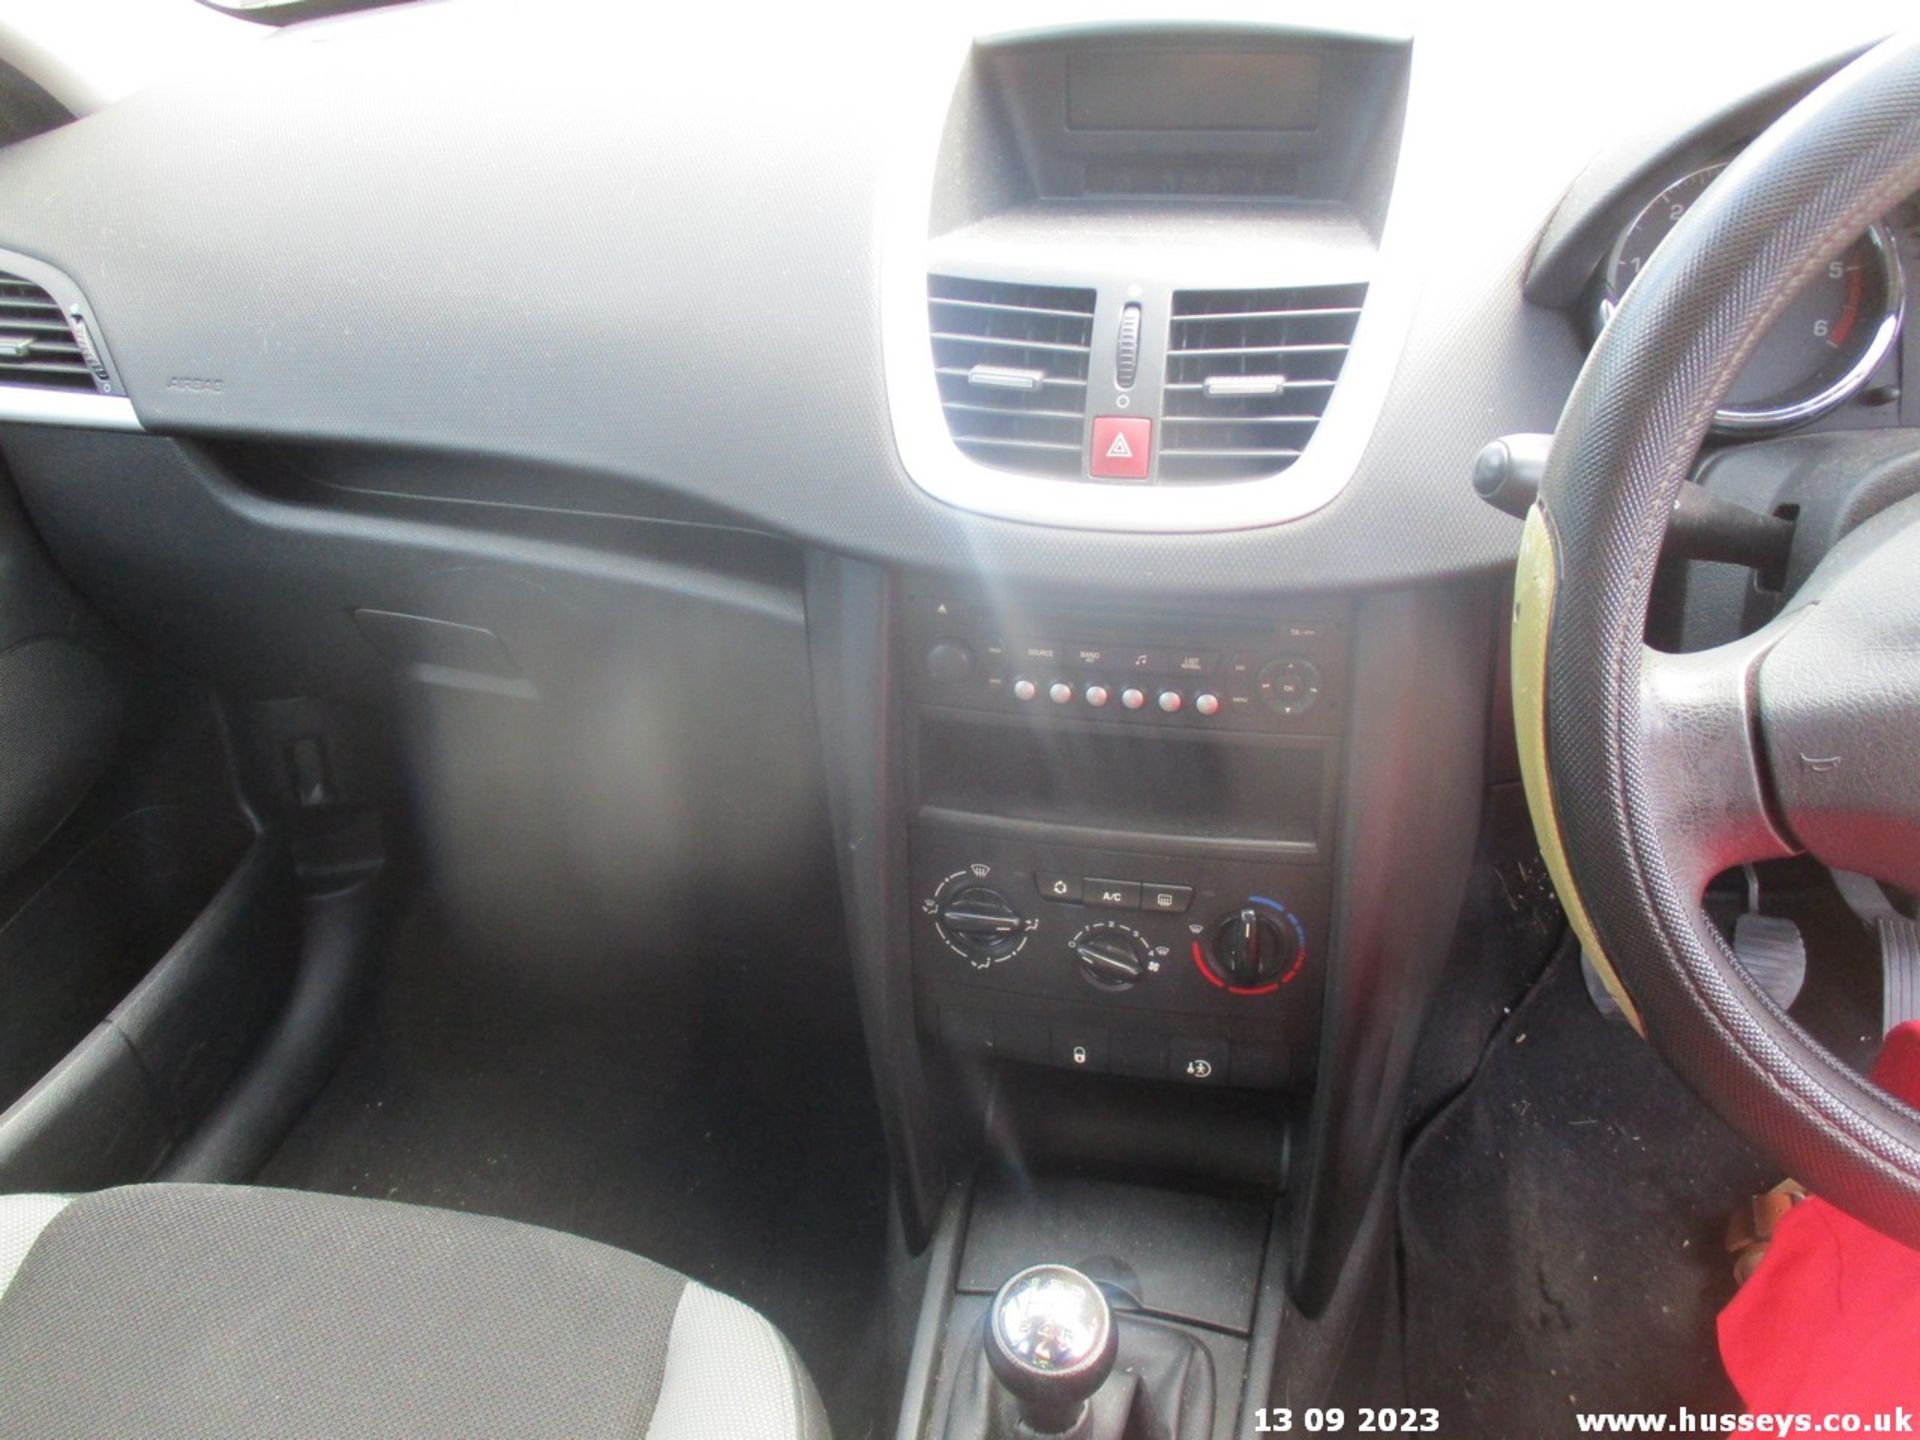 08/08 PEUGEOT 207 S HDI 67 - 1398cc 5dr Hatchback (Silver, 107k) - Image 13 of 13